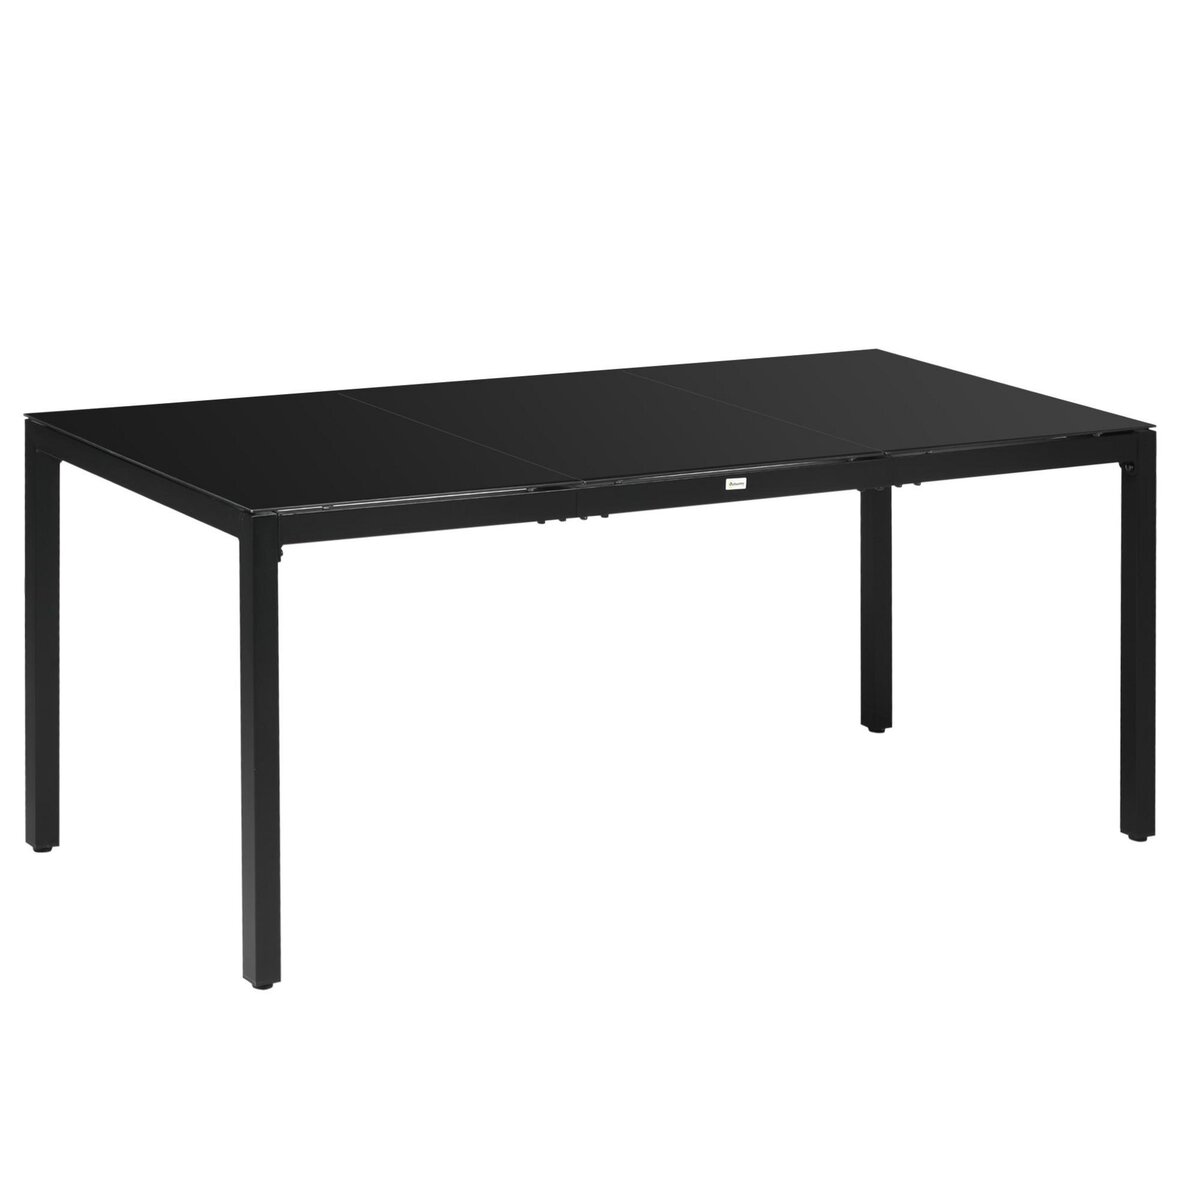 Outsunny Table de Jardin Aluminium Table Extensible avec Plateau